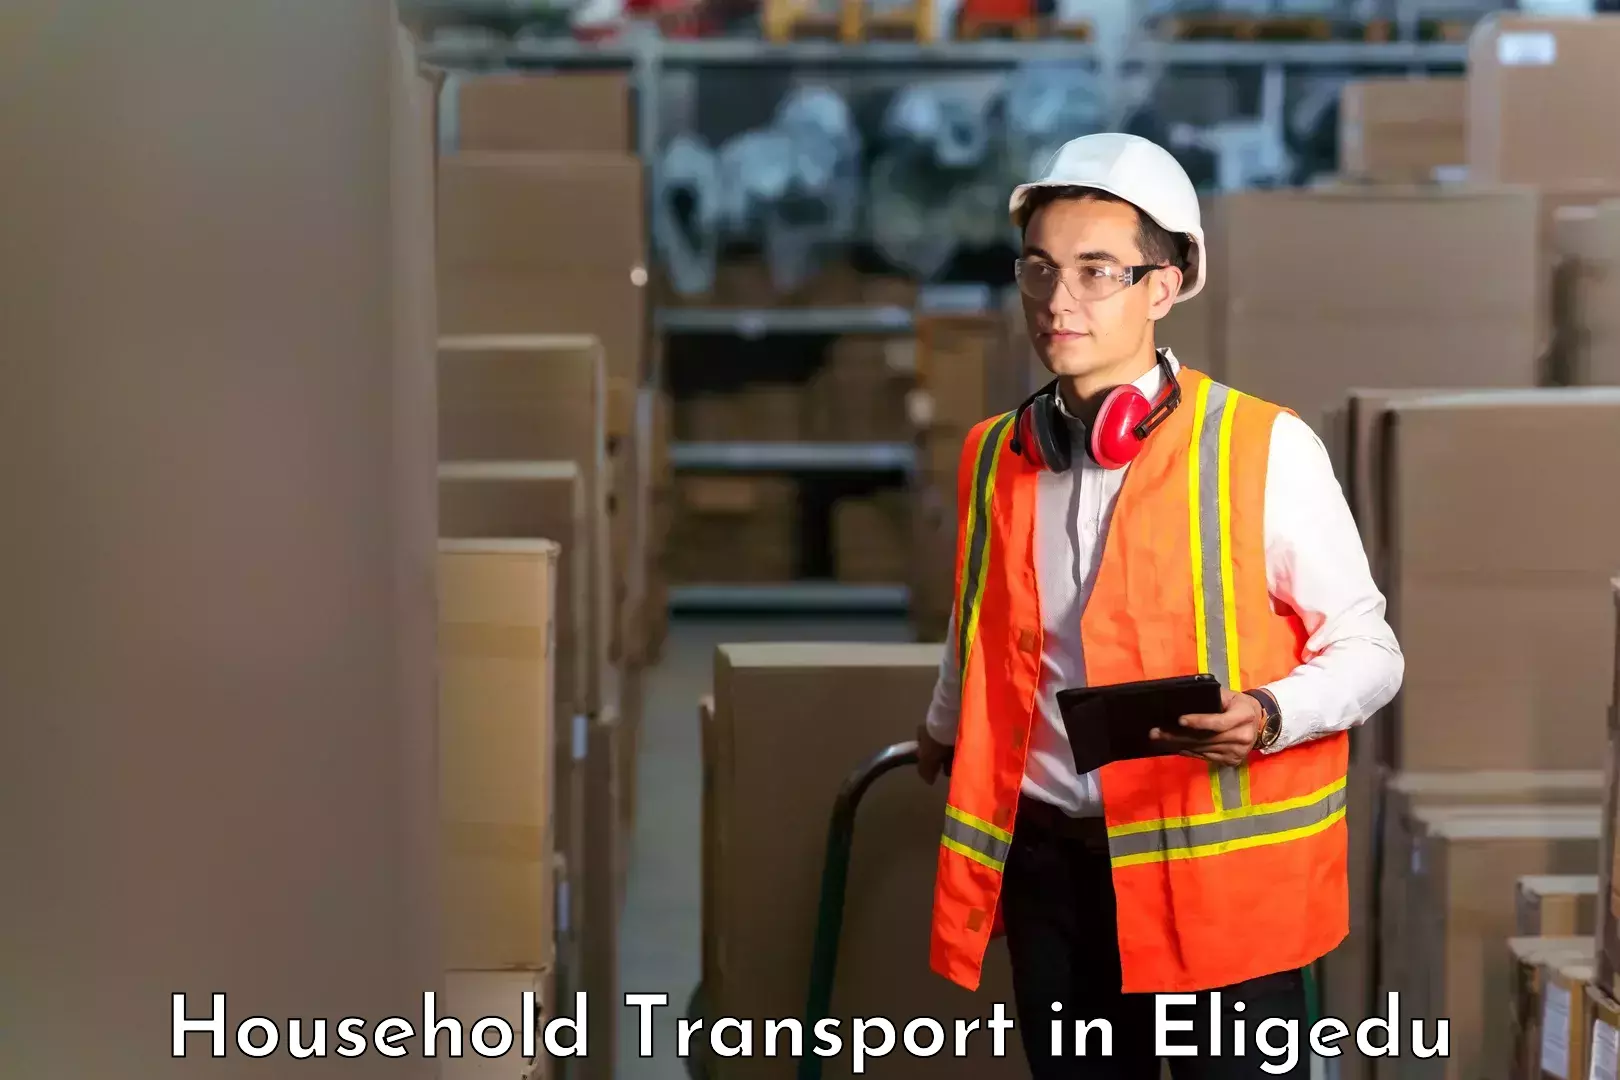 Efficient relocation services in Eligedu